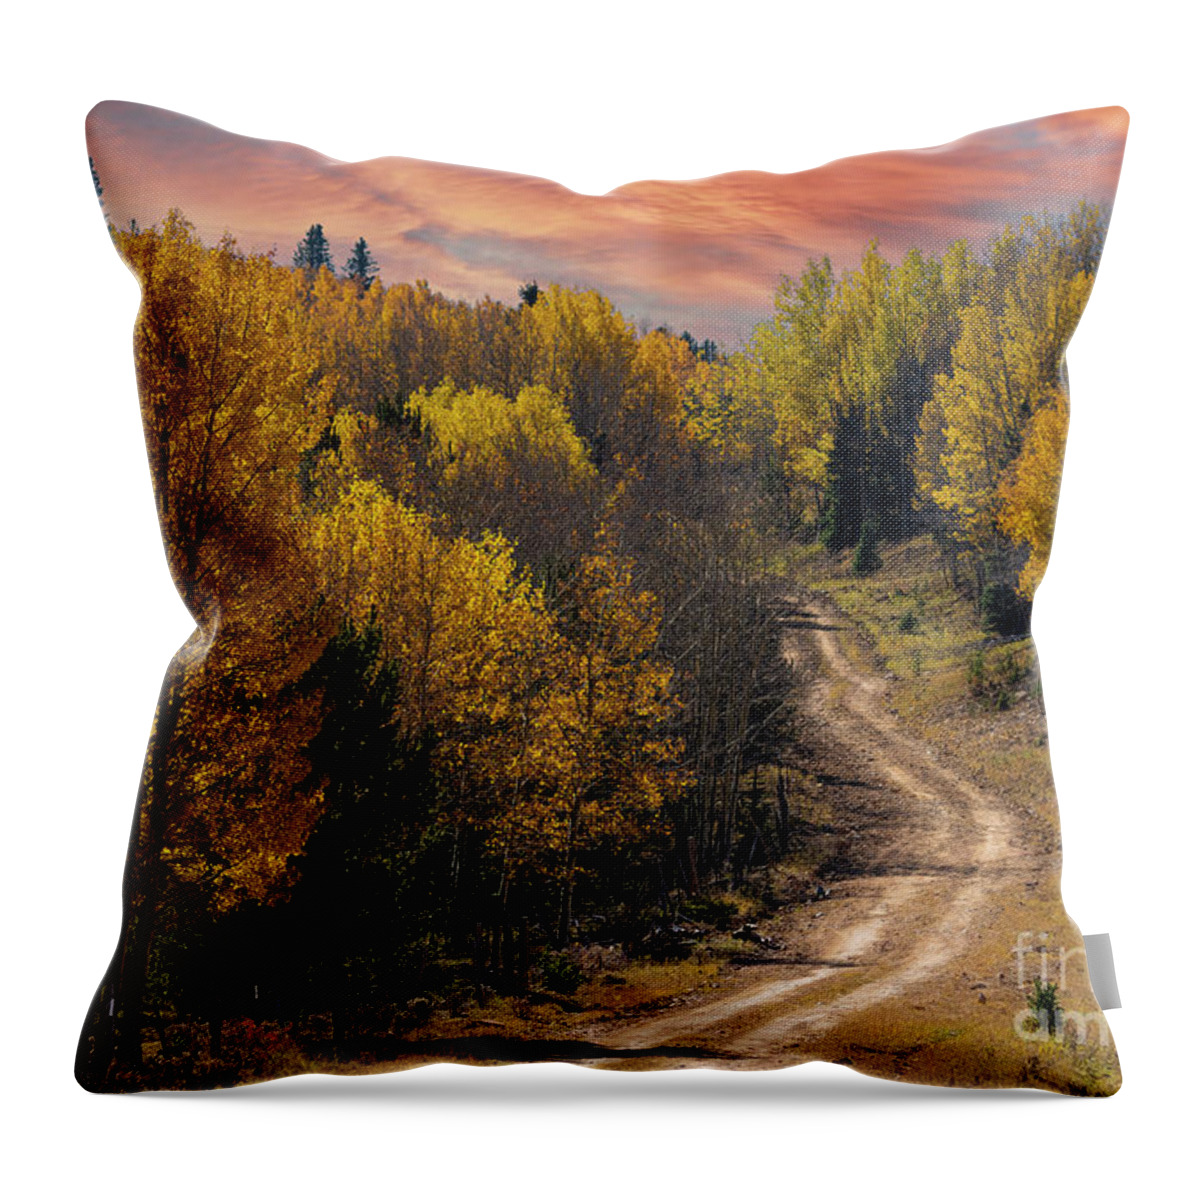 Autumn Throw Pillow featuring the photograph Pikes Peak Autumn Sunrise by Steven Krull